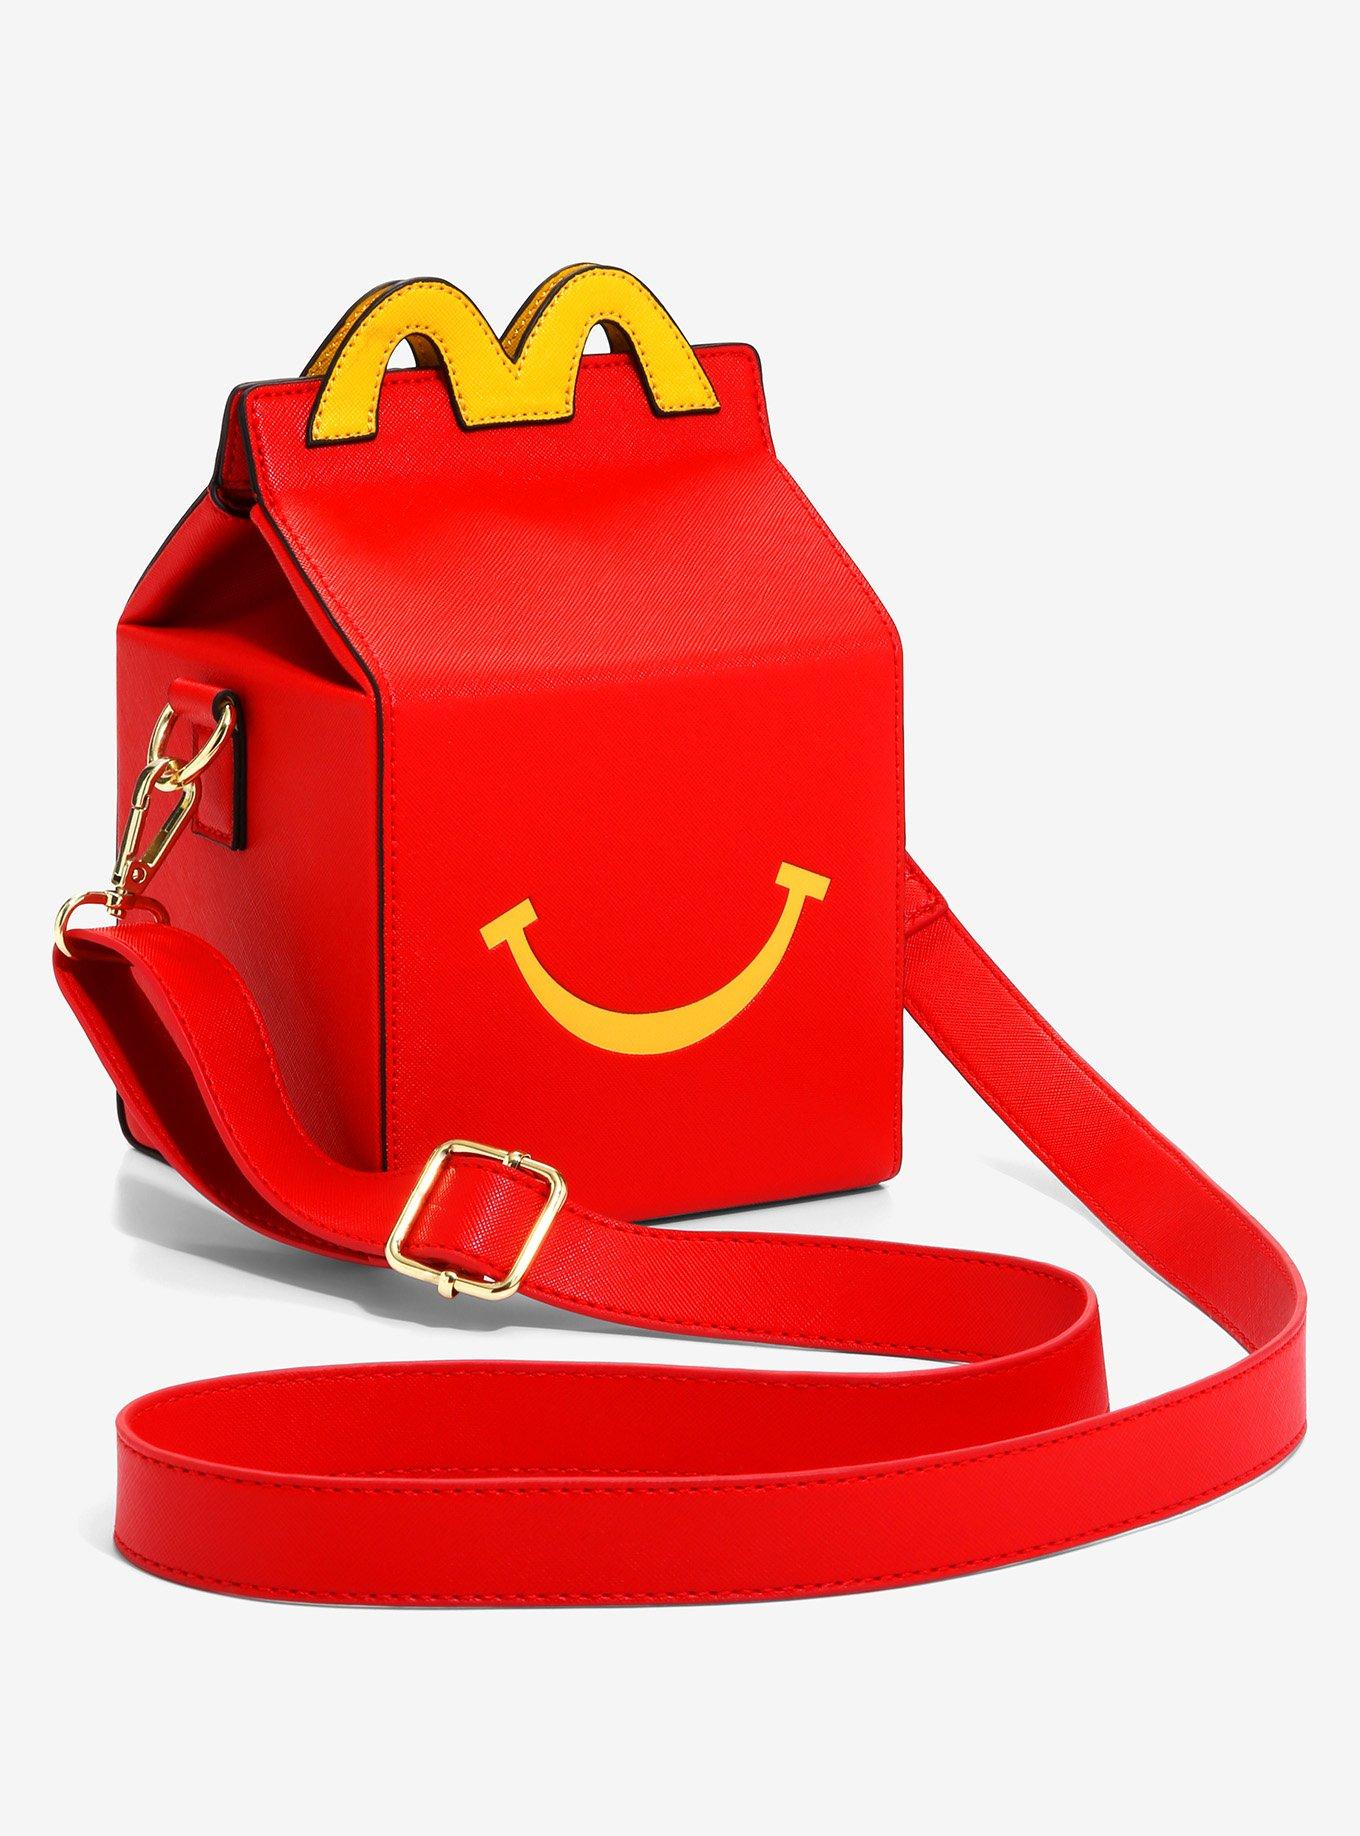 Pin on Handbags + Happiness